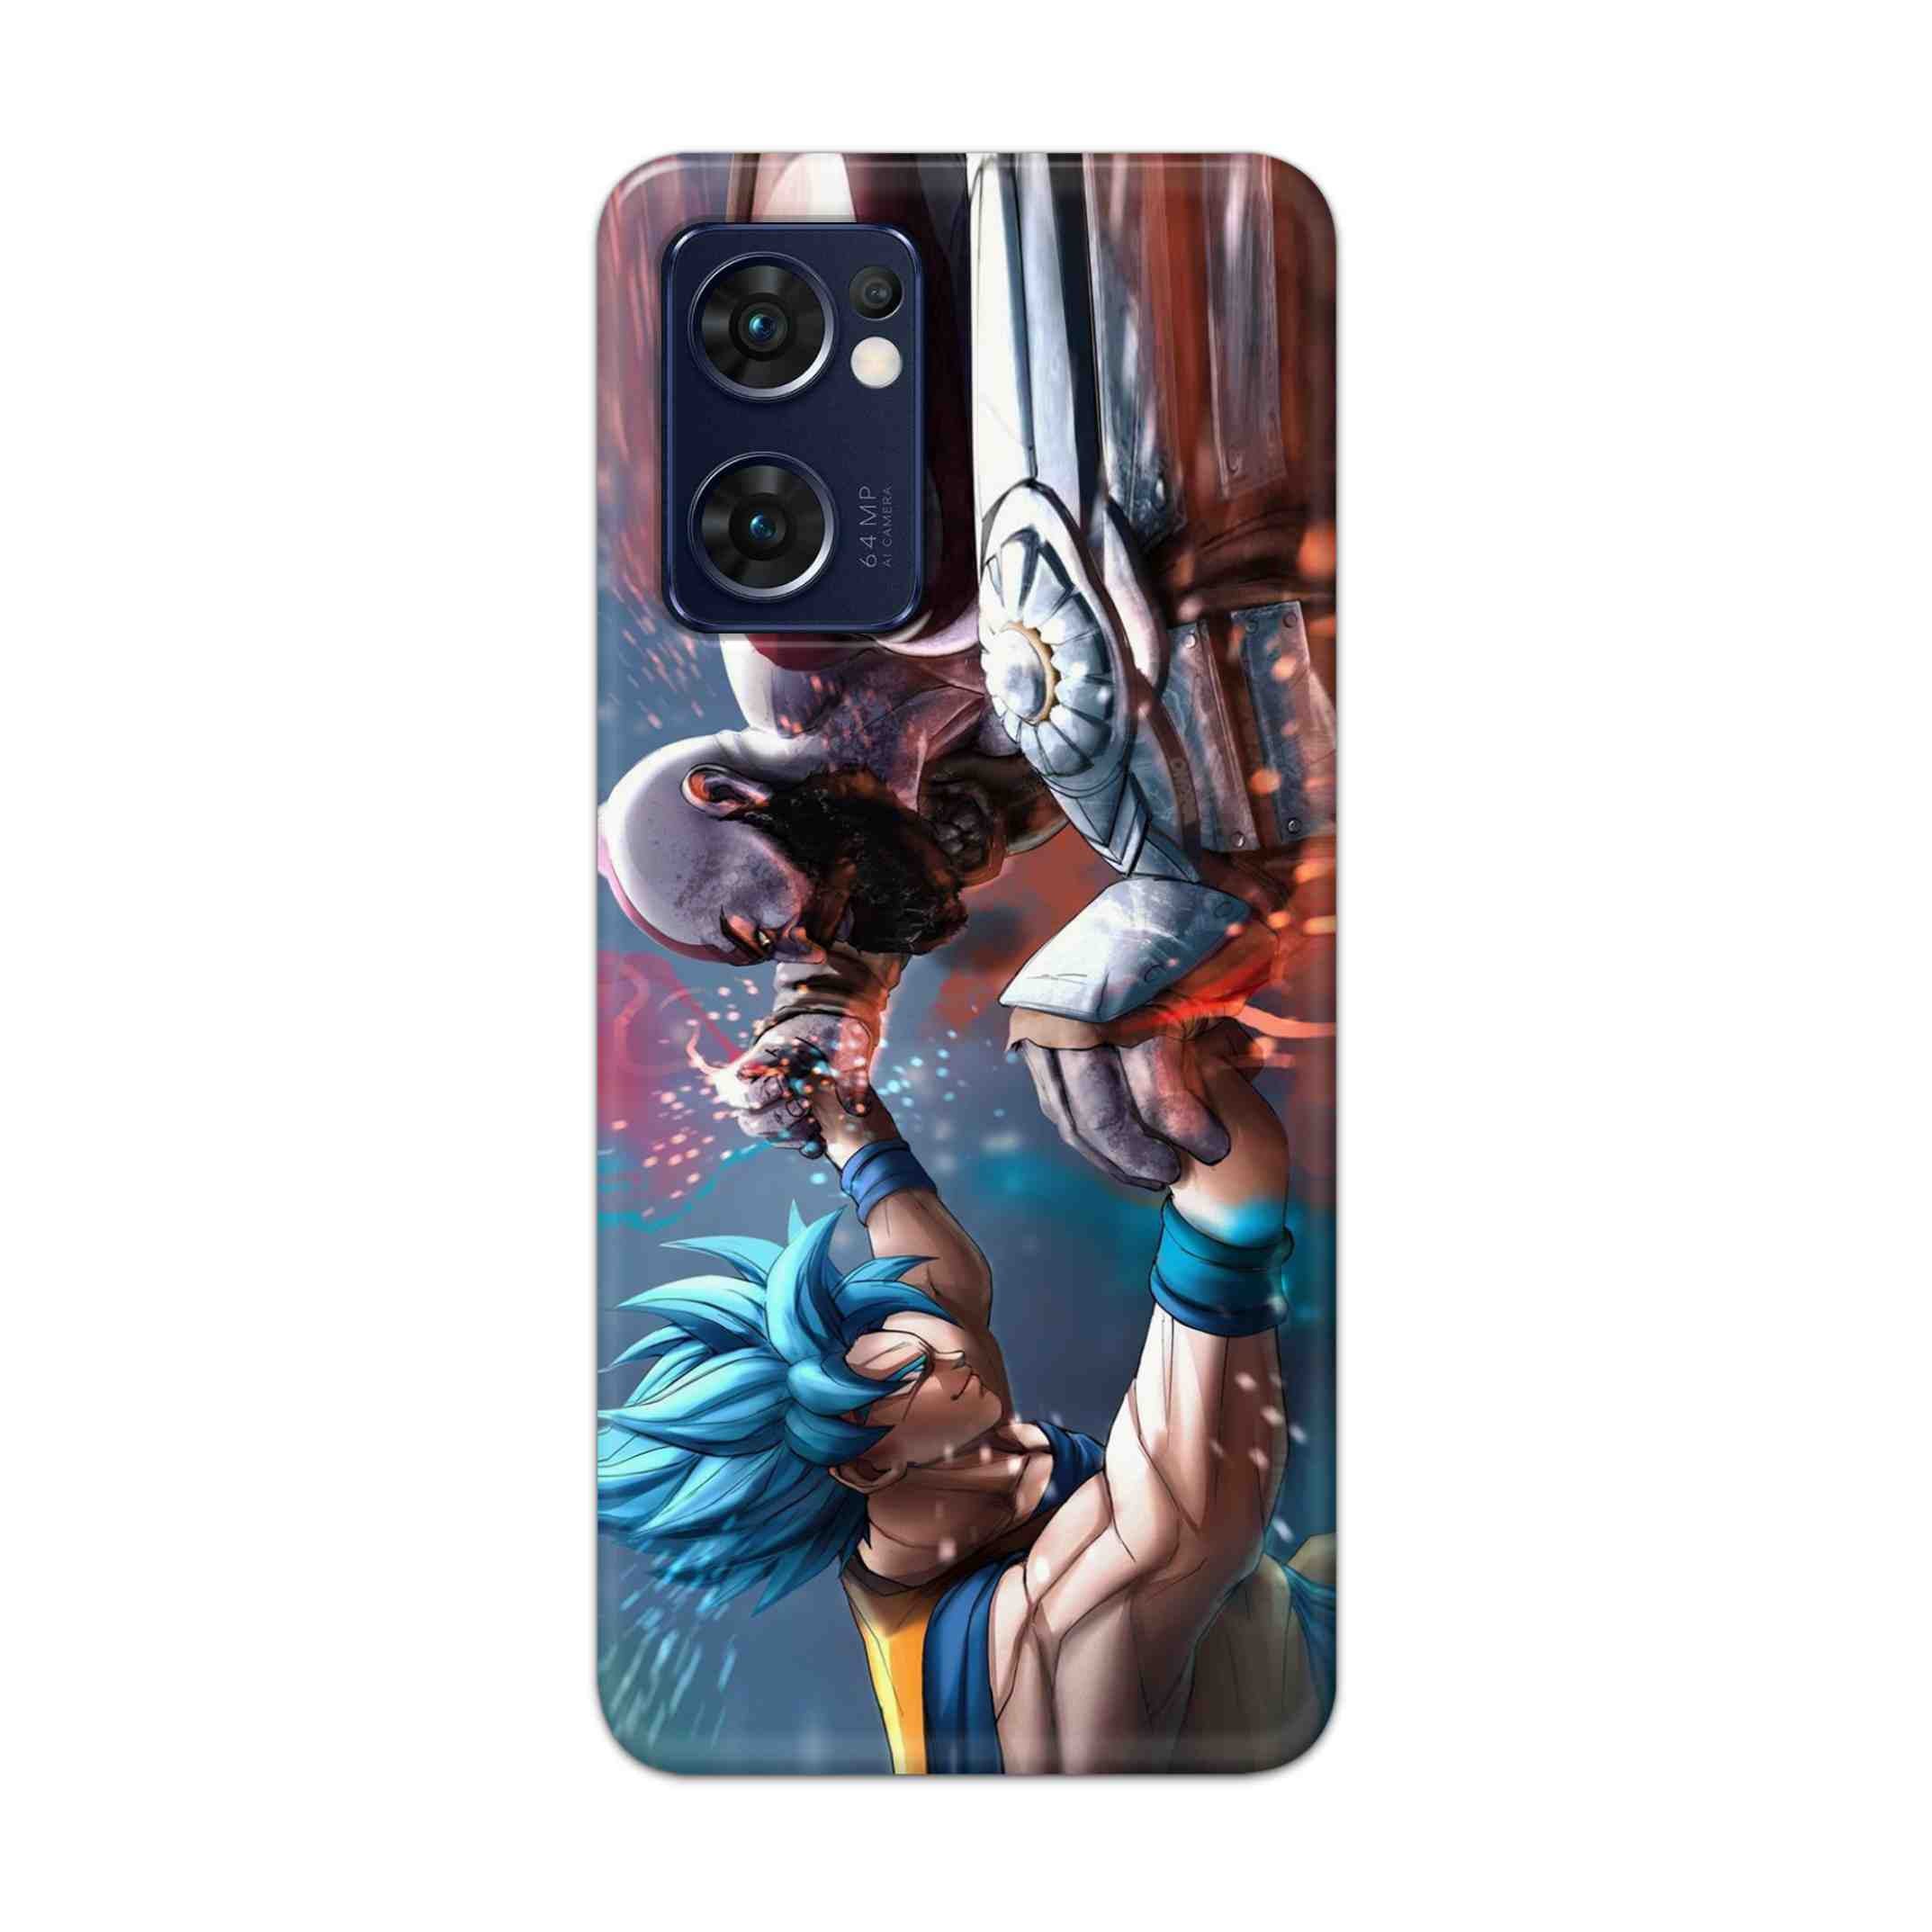 Buy Goku Vs Kratos Hard Back Mobile Phone Case Cover For Reno 7 5G Online